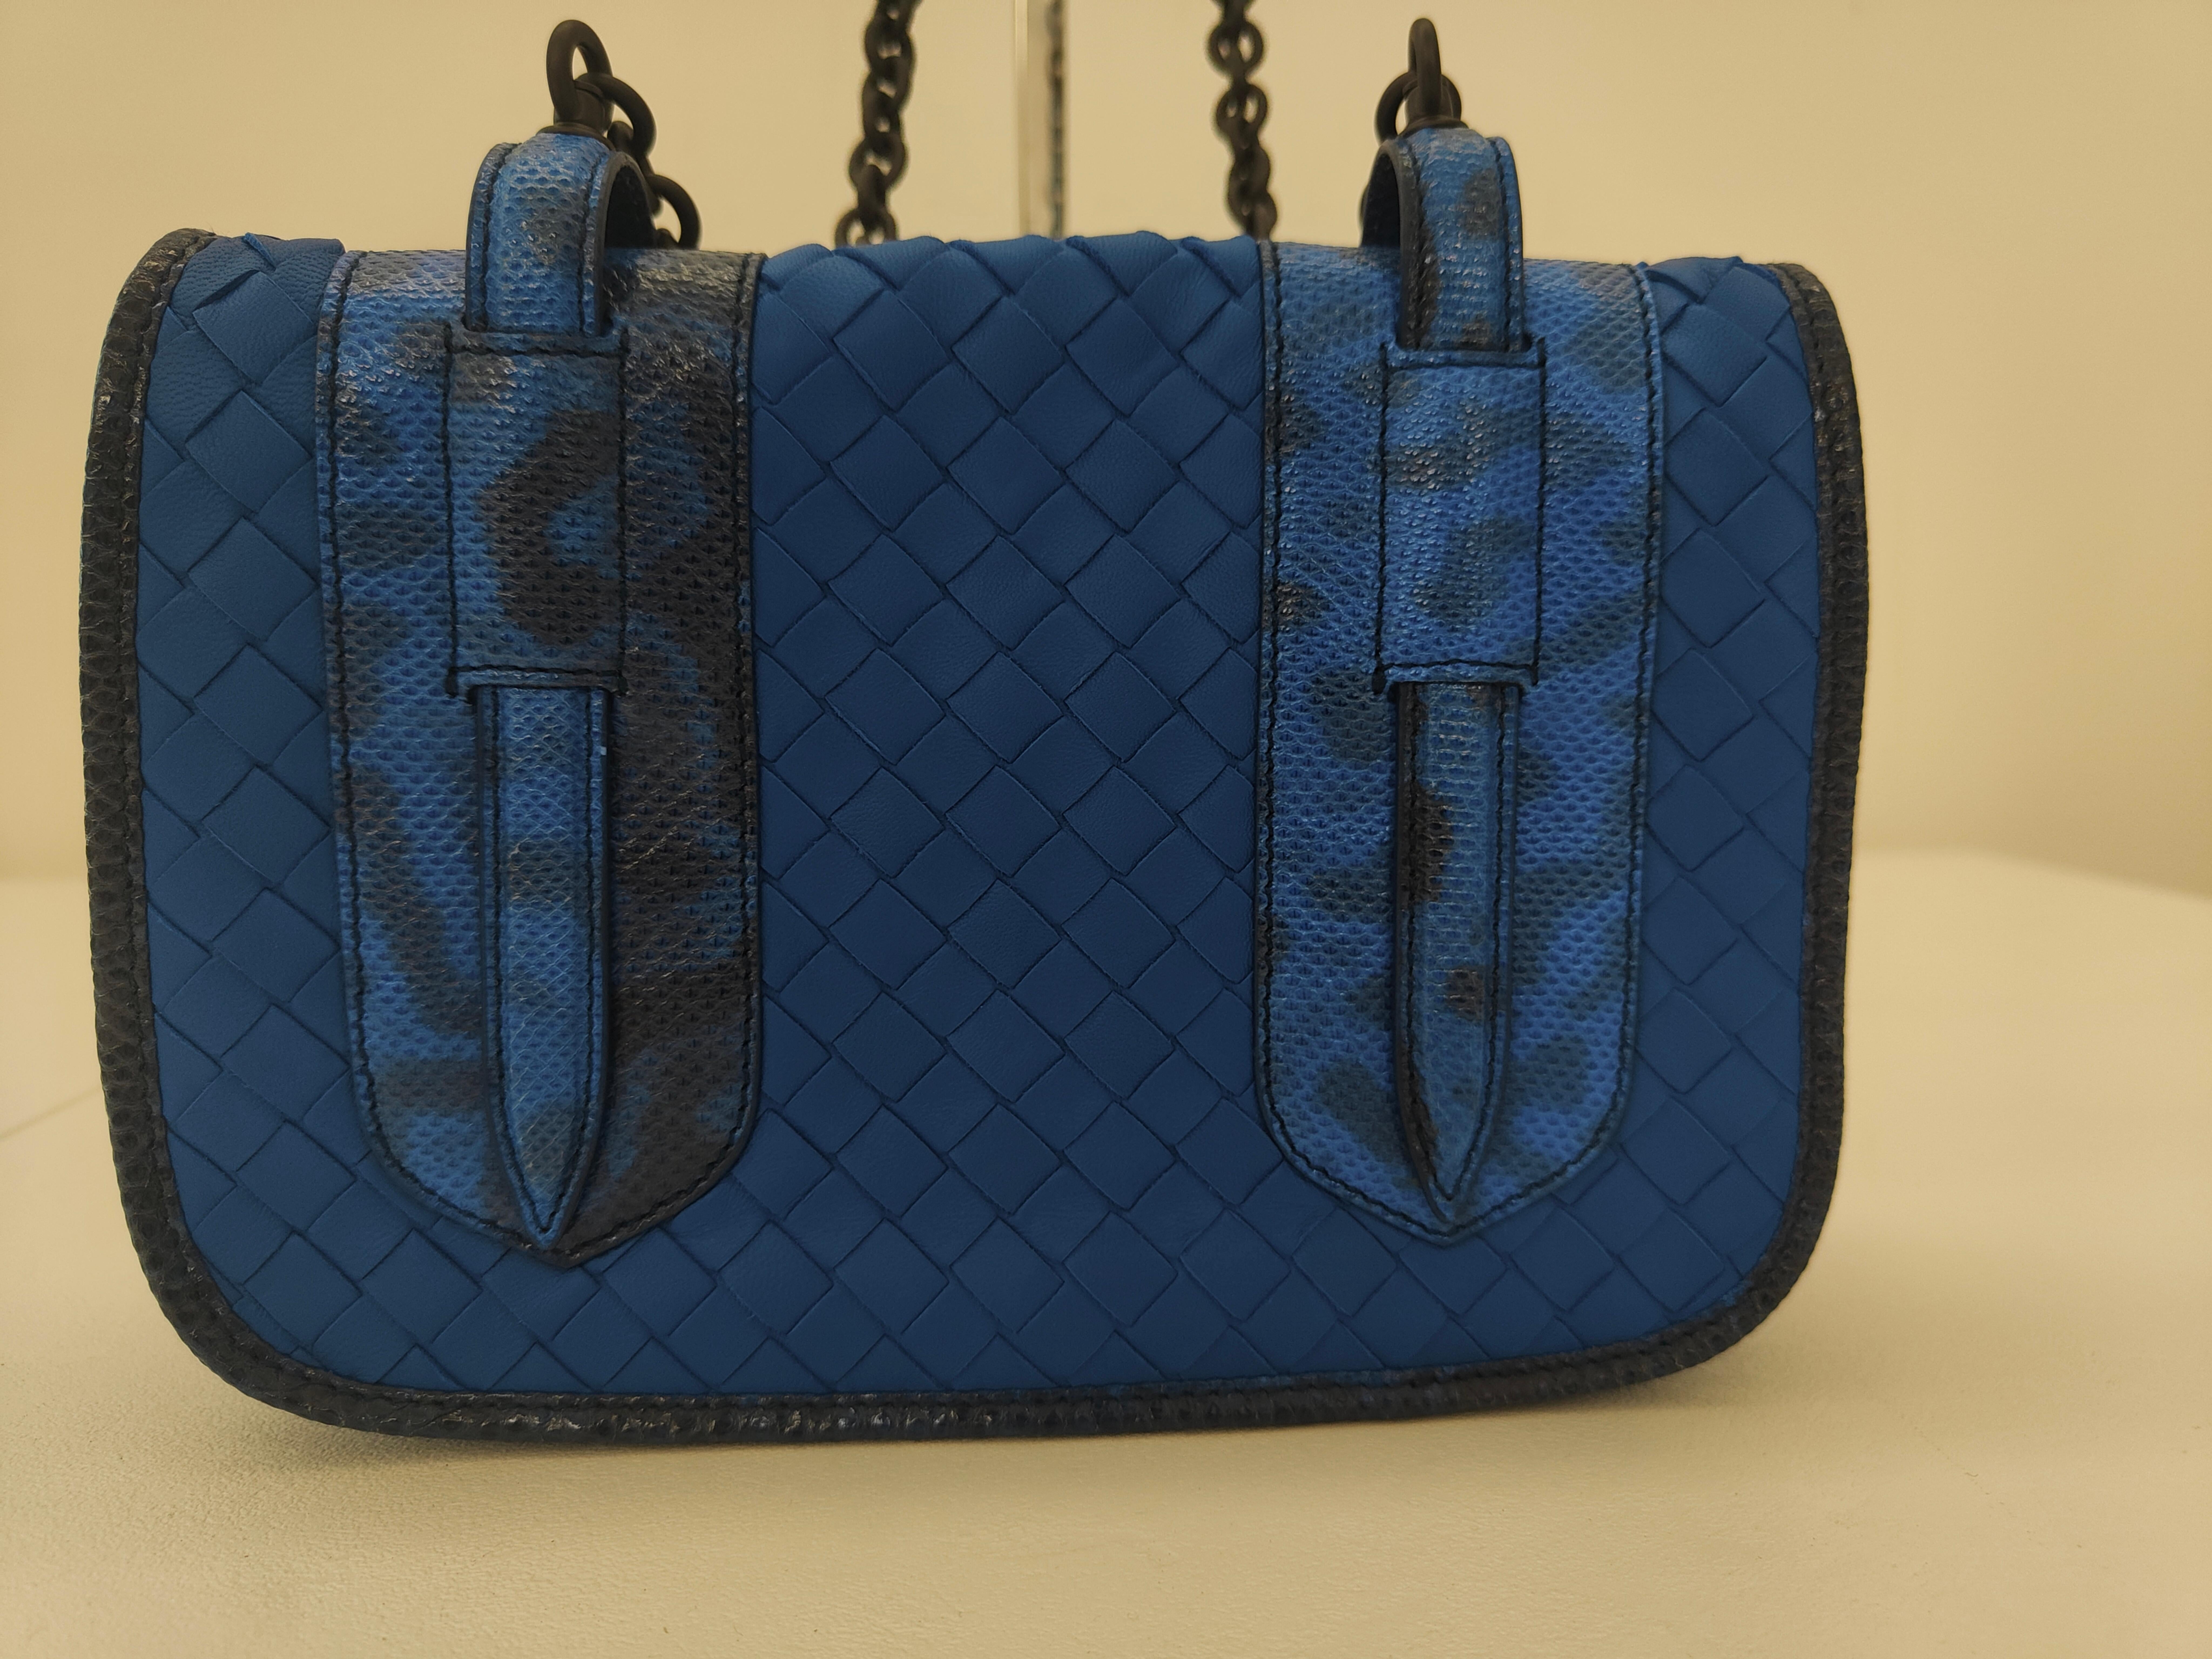 Bottega Veneta blue leather shoulder bag In Excellent Condition For Sale In Capri, IT